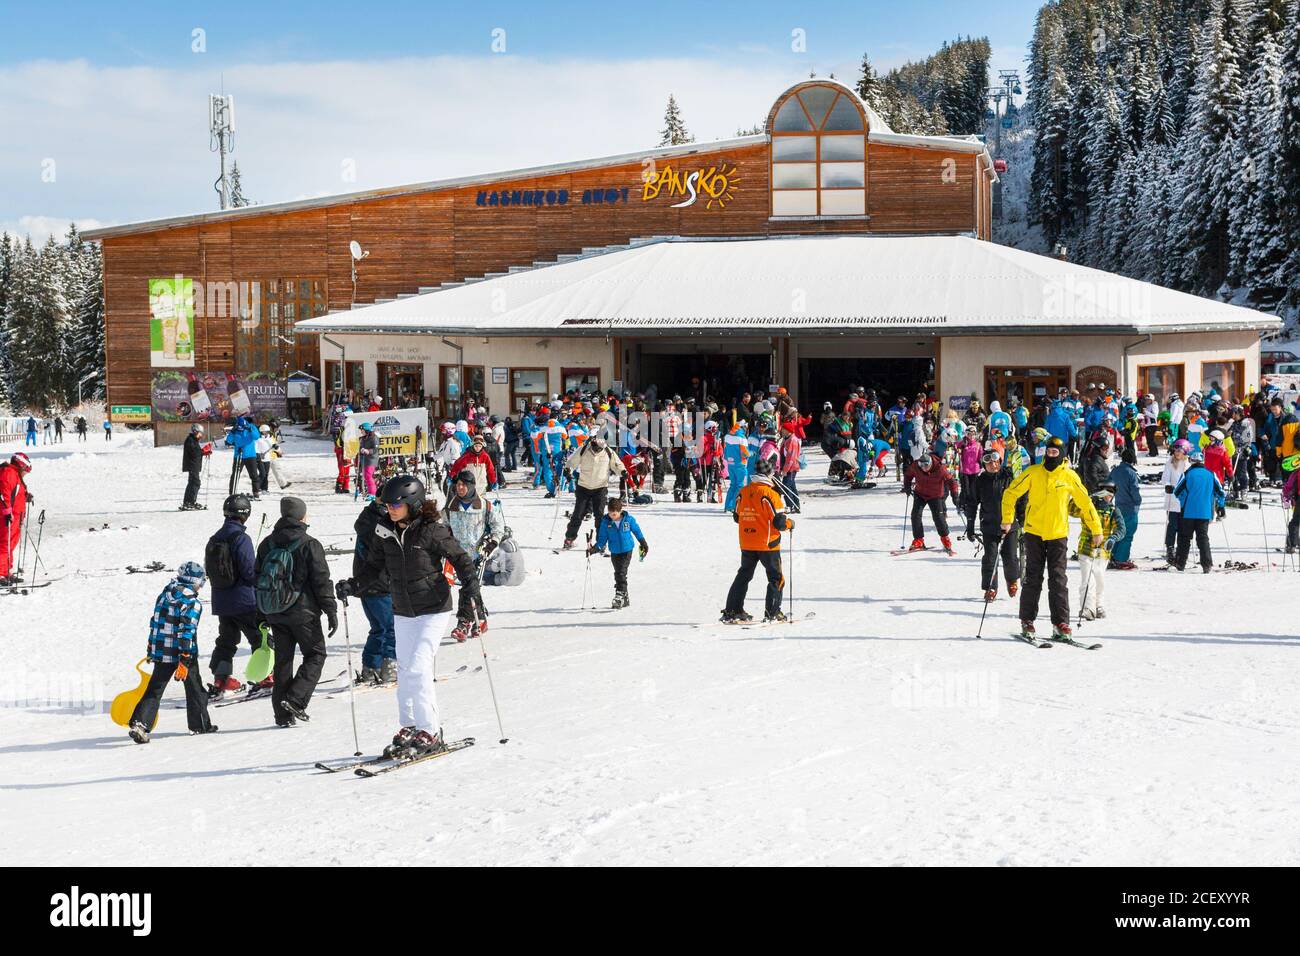 Bansko, Bulgarien - 4. März 2016: Bansko Skigebiet, Skilift Station, Seilbahn Menschen Skifahren Stockfoto